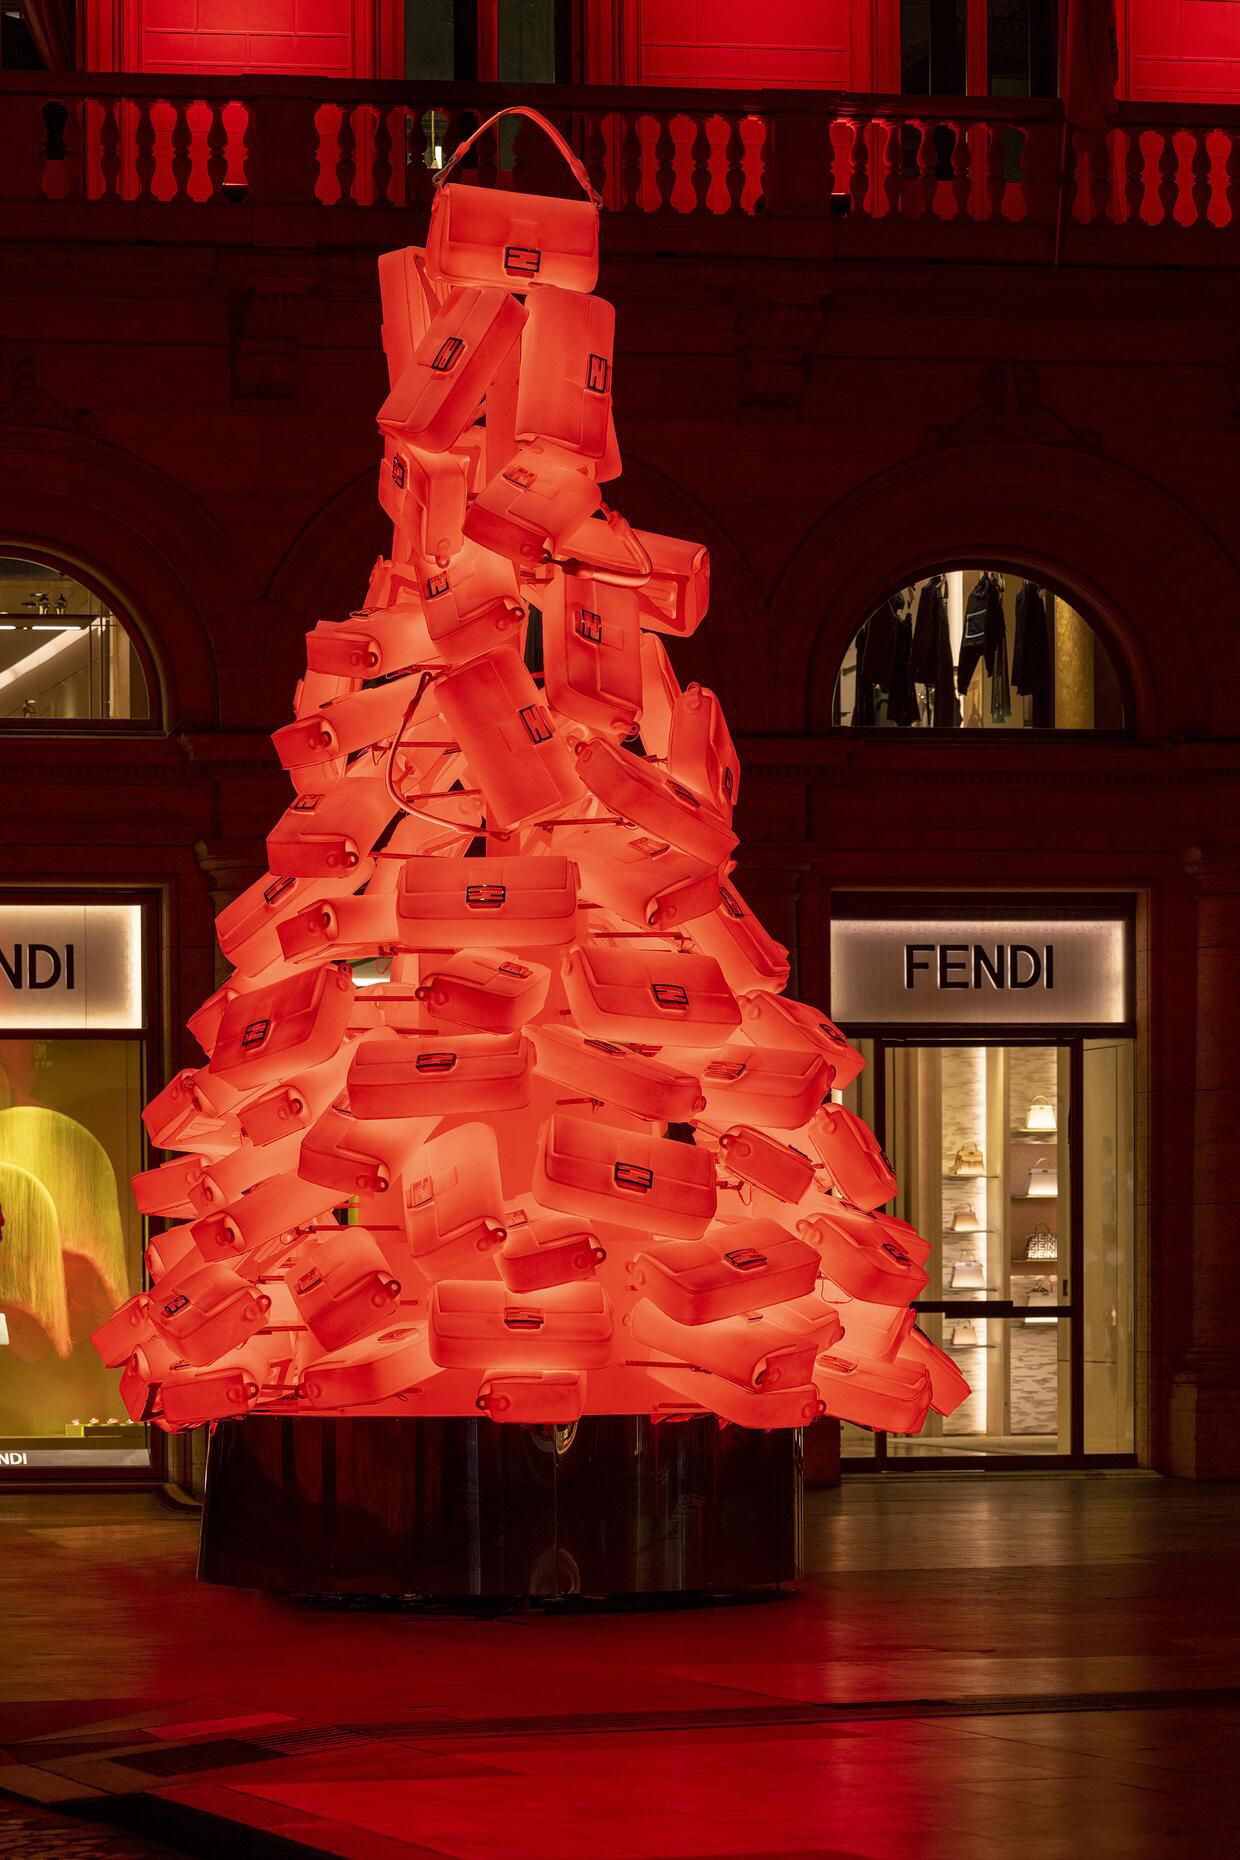 Fendi Displays Their Annual Roman Holiday Decorations